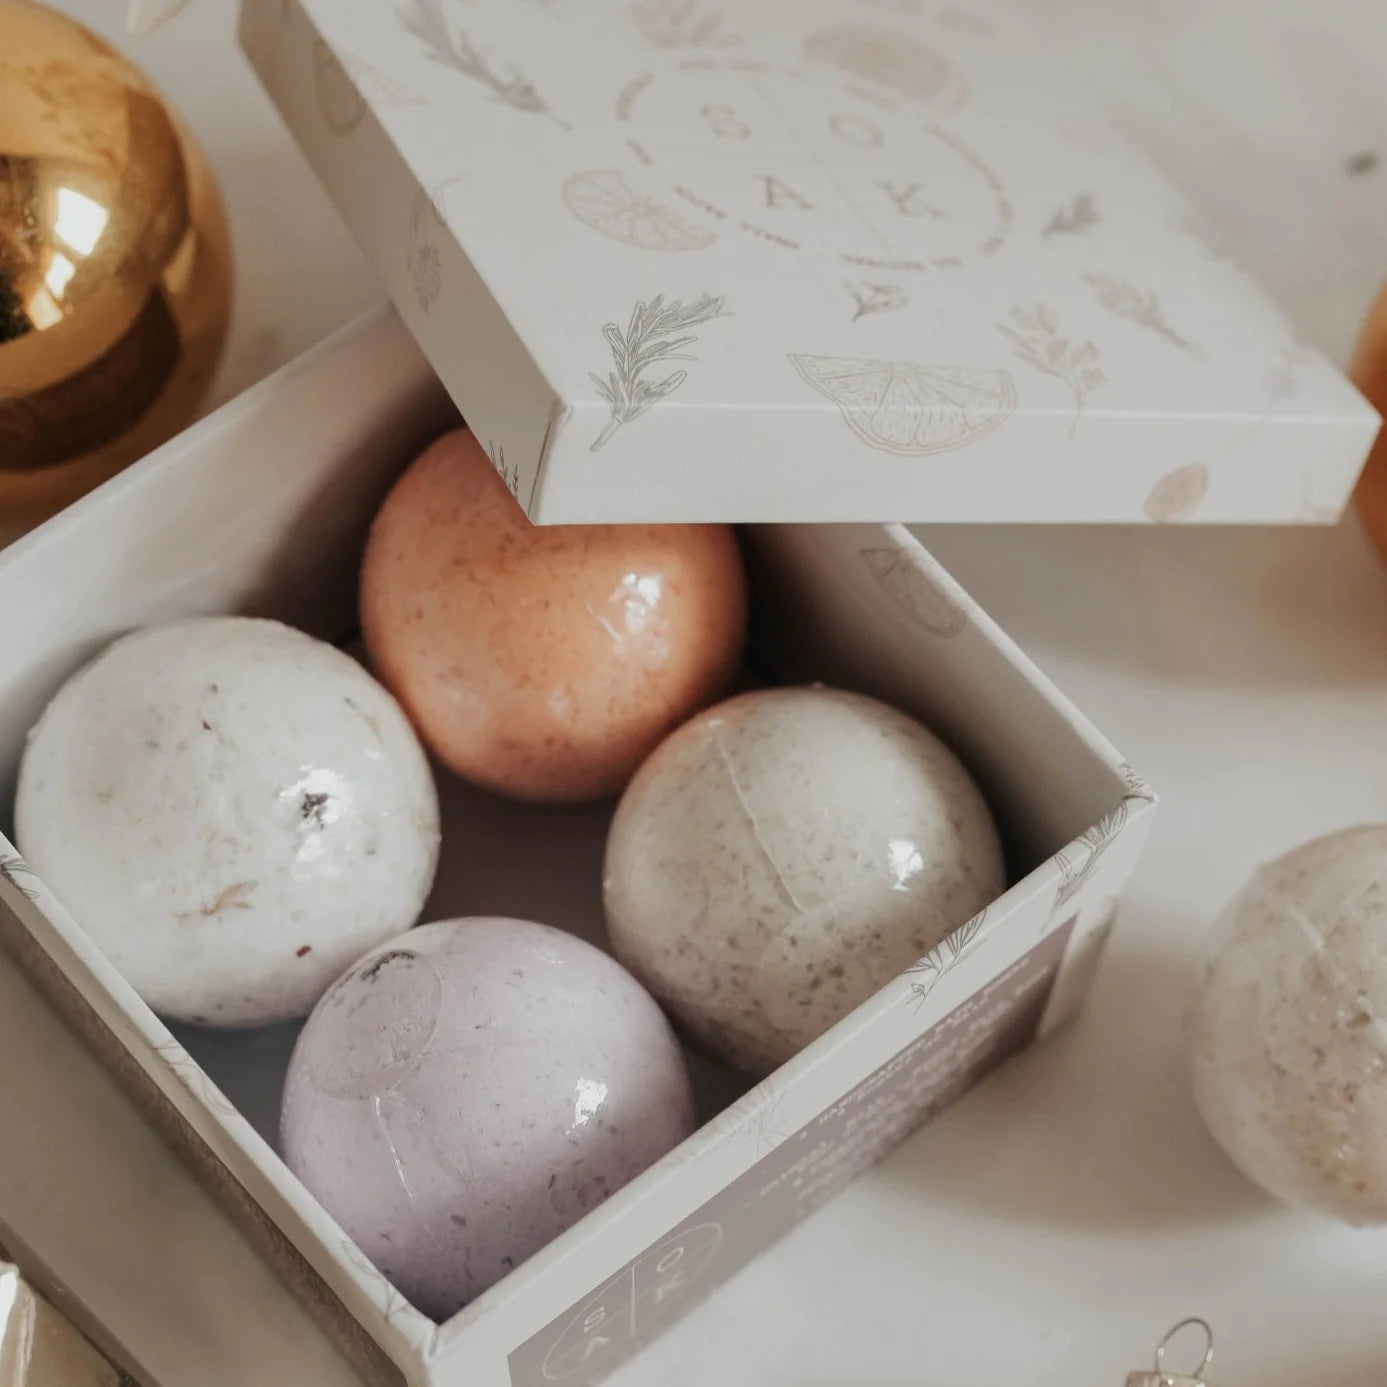 Mini Bath Bombs - Gift Box